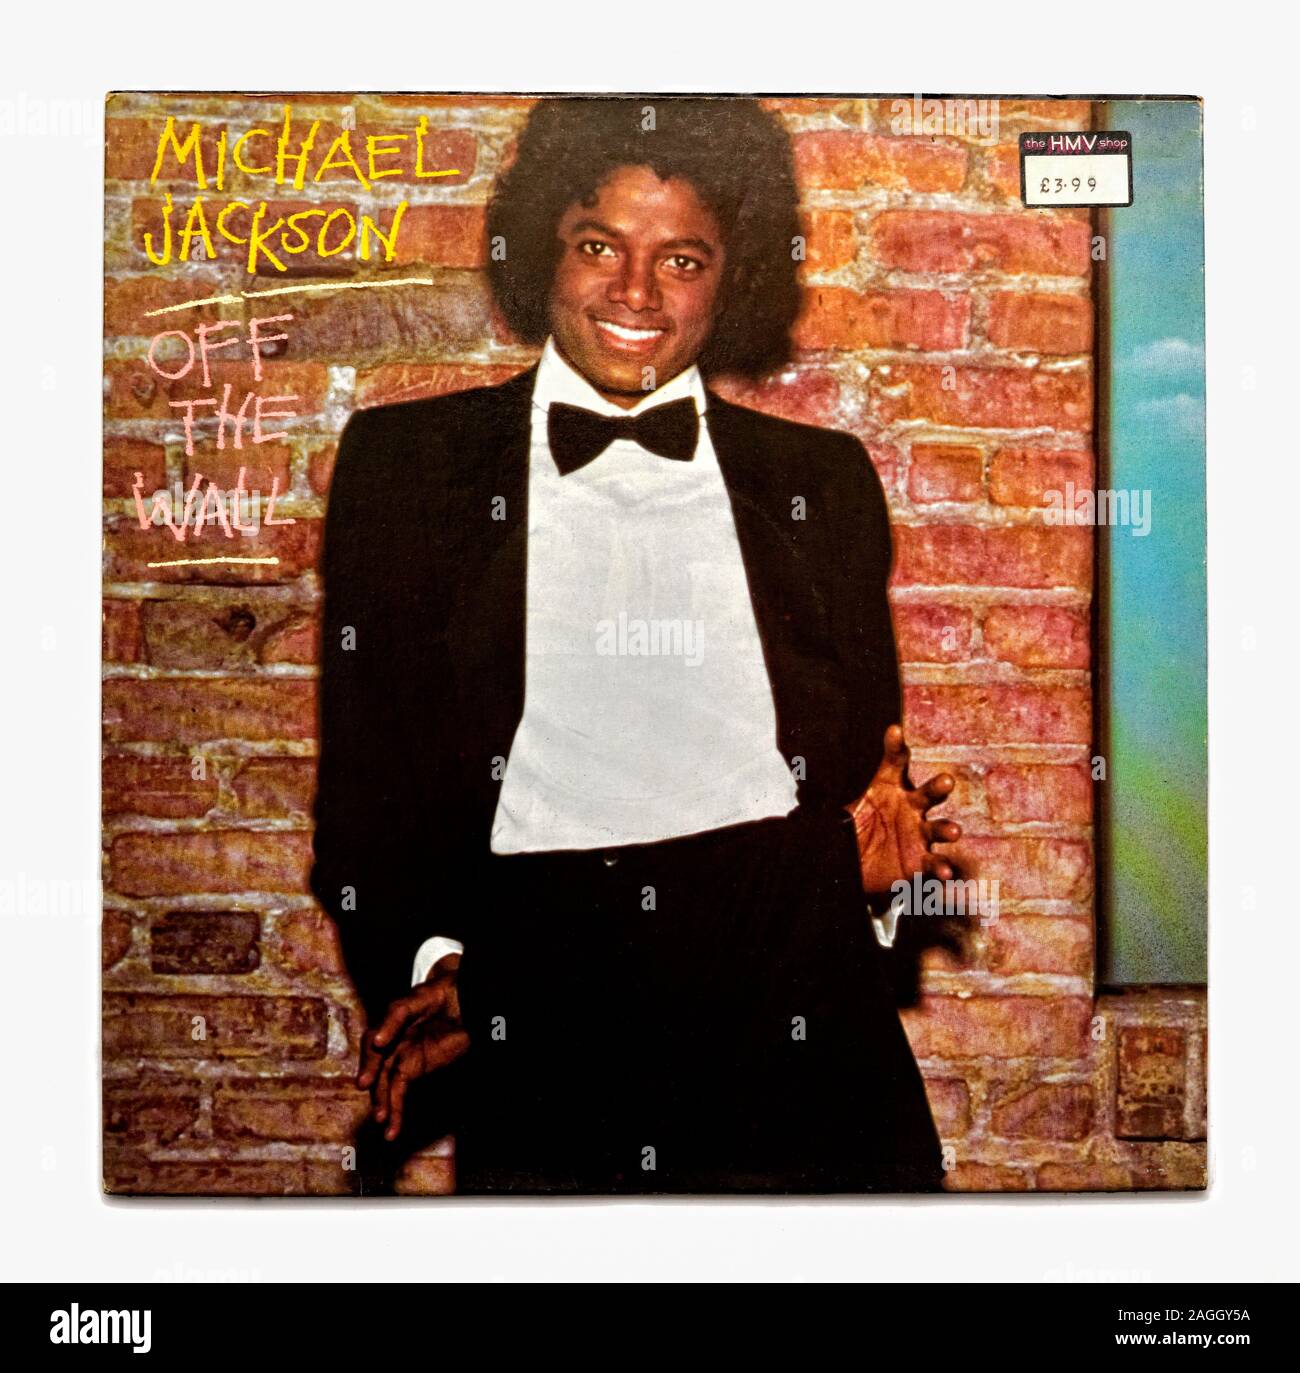 Hmv price sticker on Michael Jackson's Album cover OFF THE WALL Stock Photo